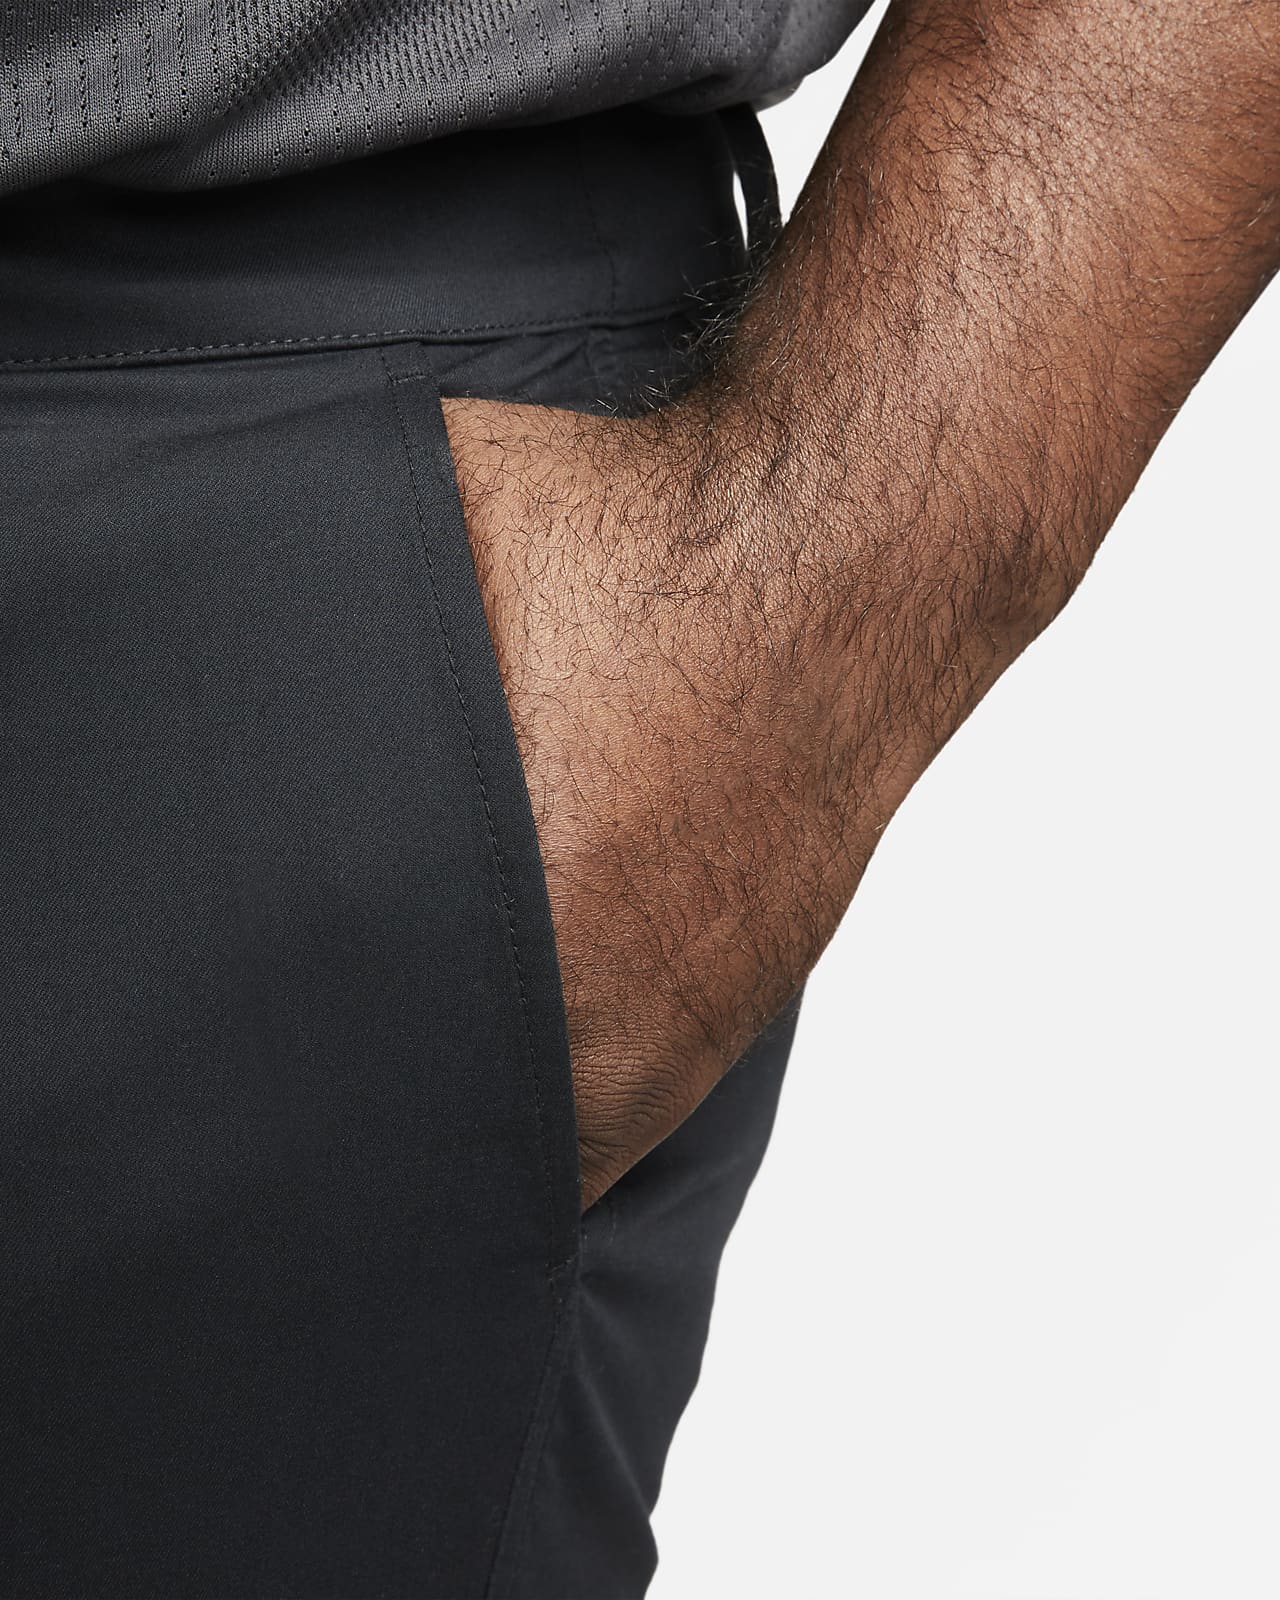 Men's Slim fit training pants